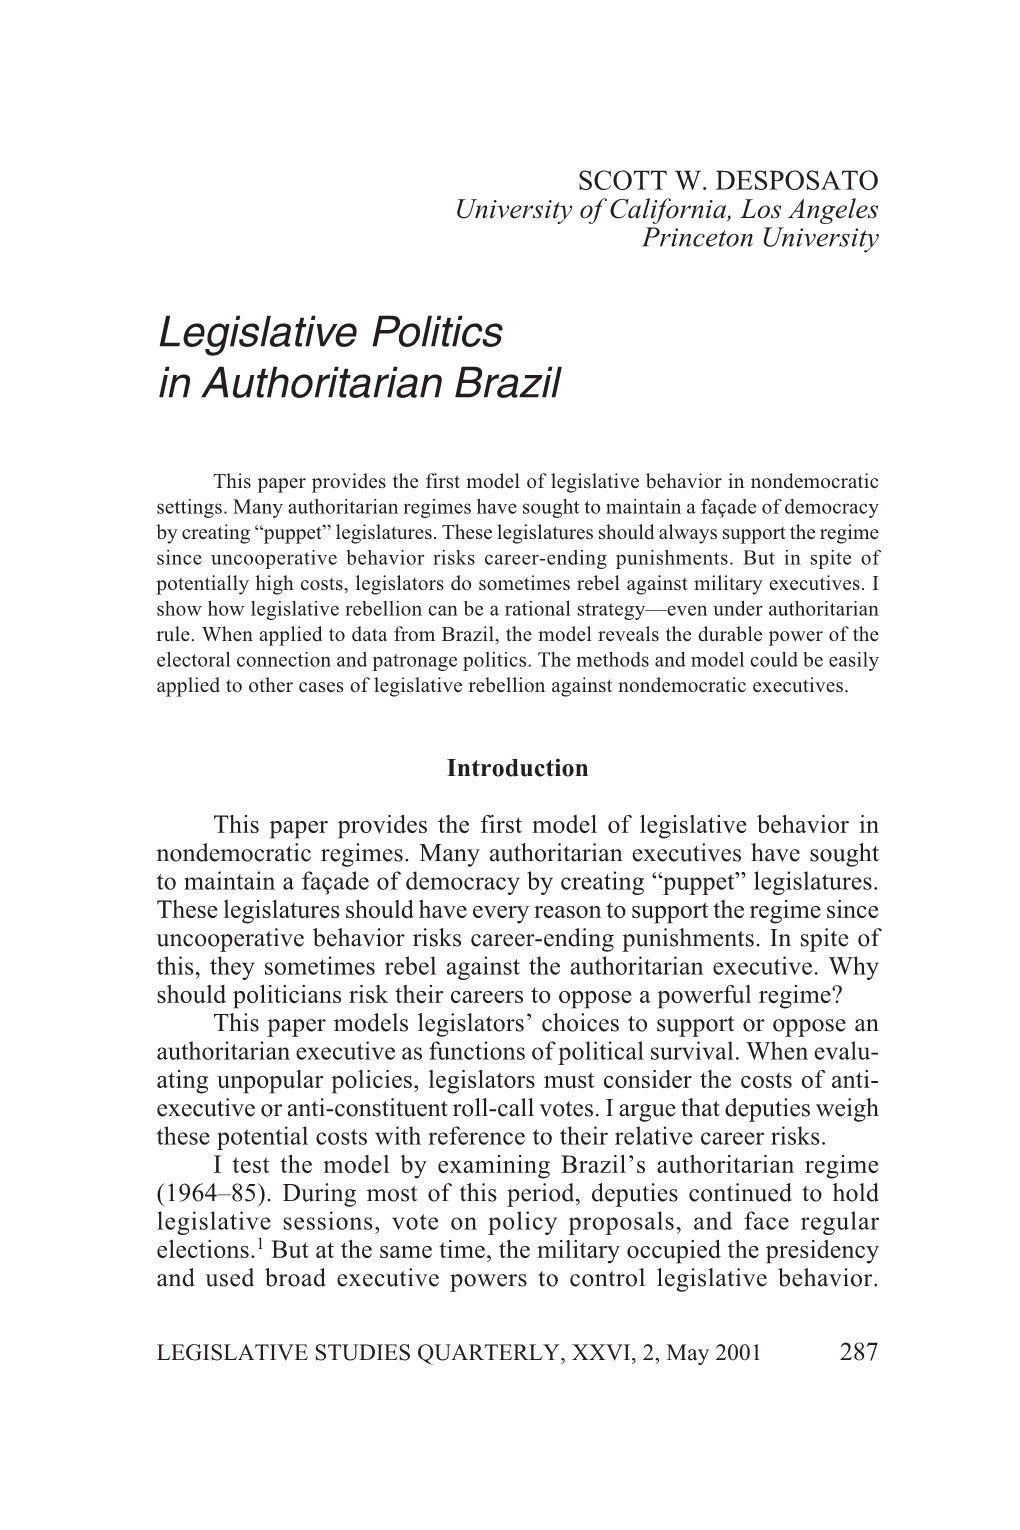 Legislative Politics in Authoritarian Brazil 287